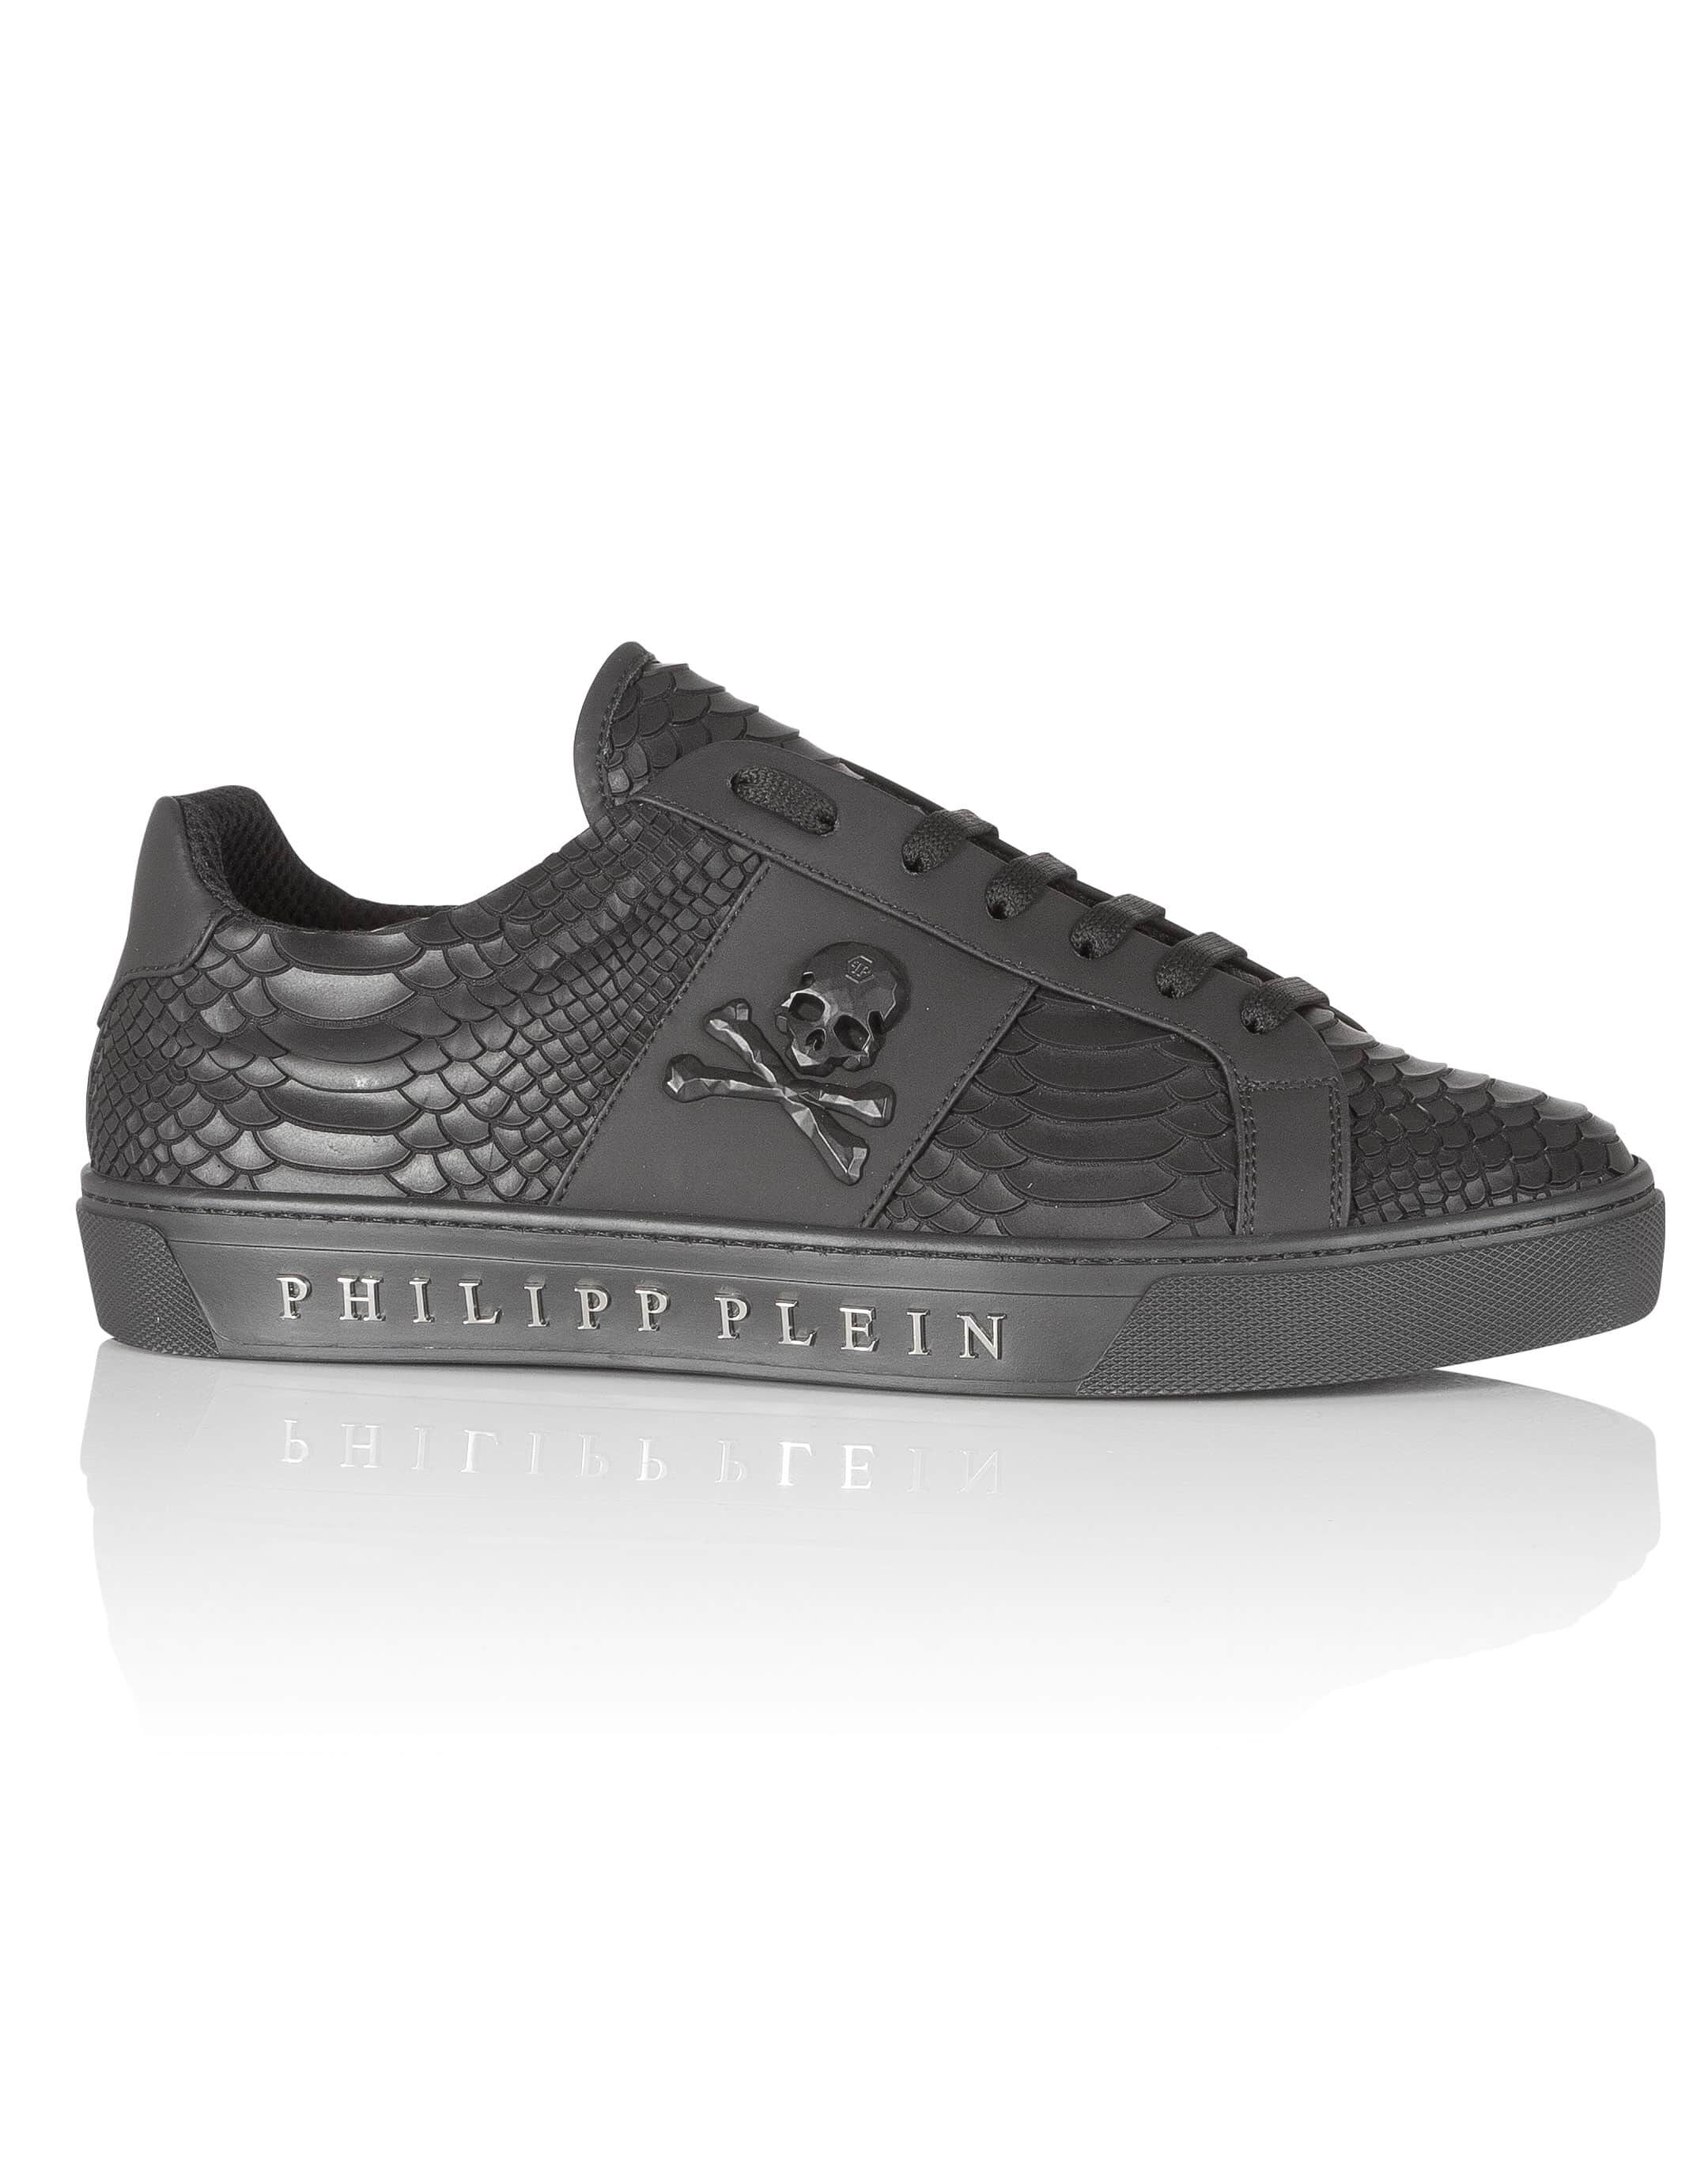 philipp plein black sneakers